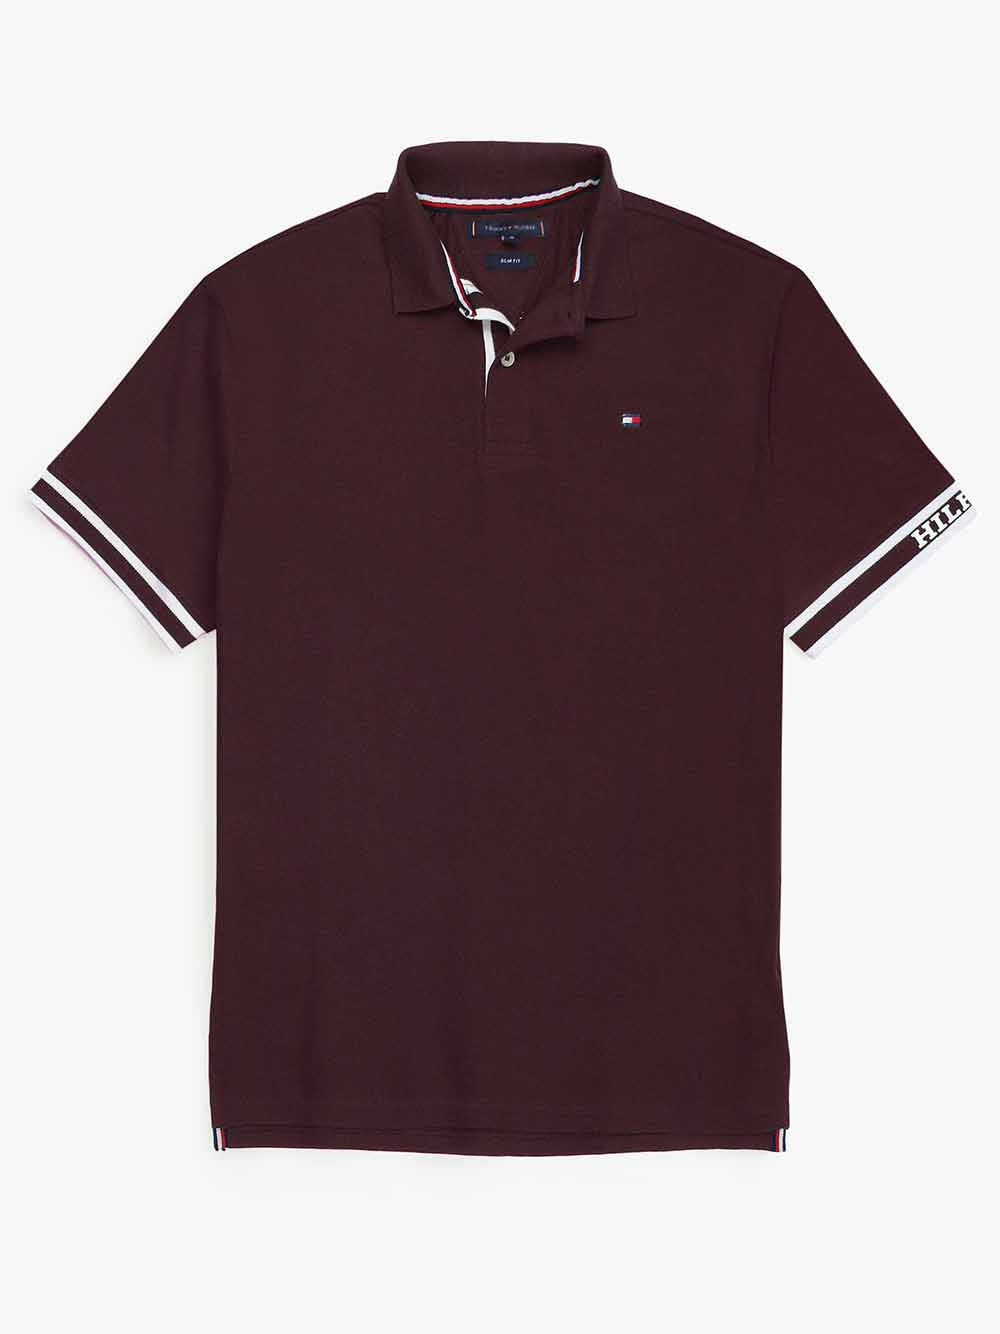 TH premium sleeve hlfgr polo shirt (Maroon)